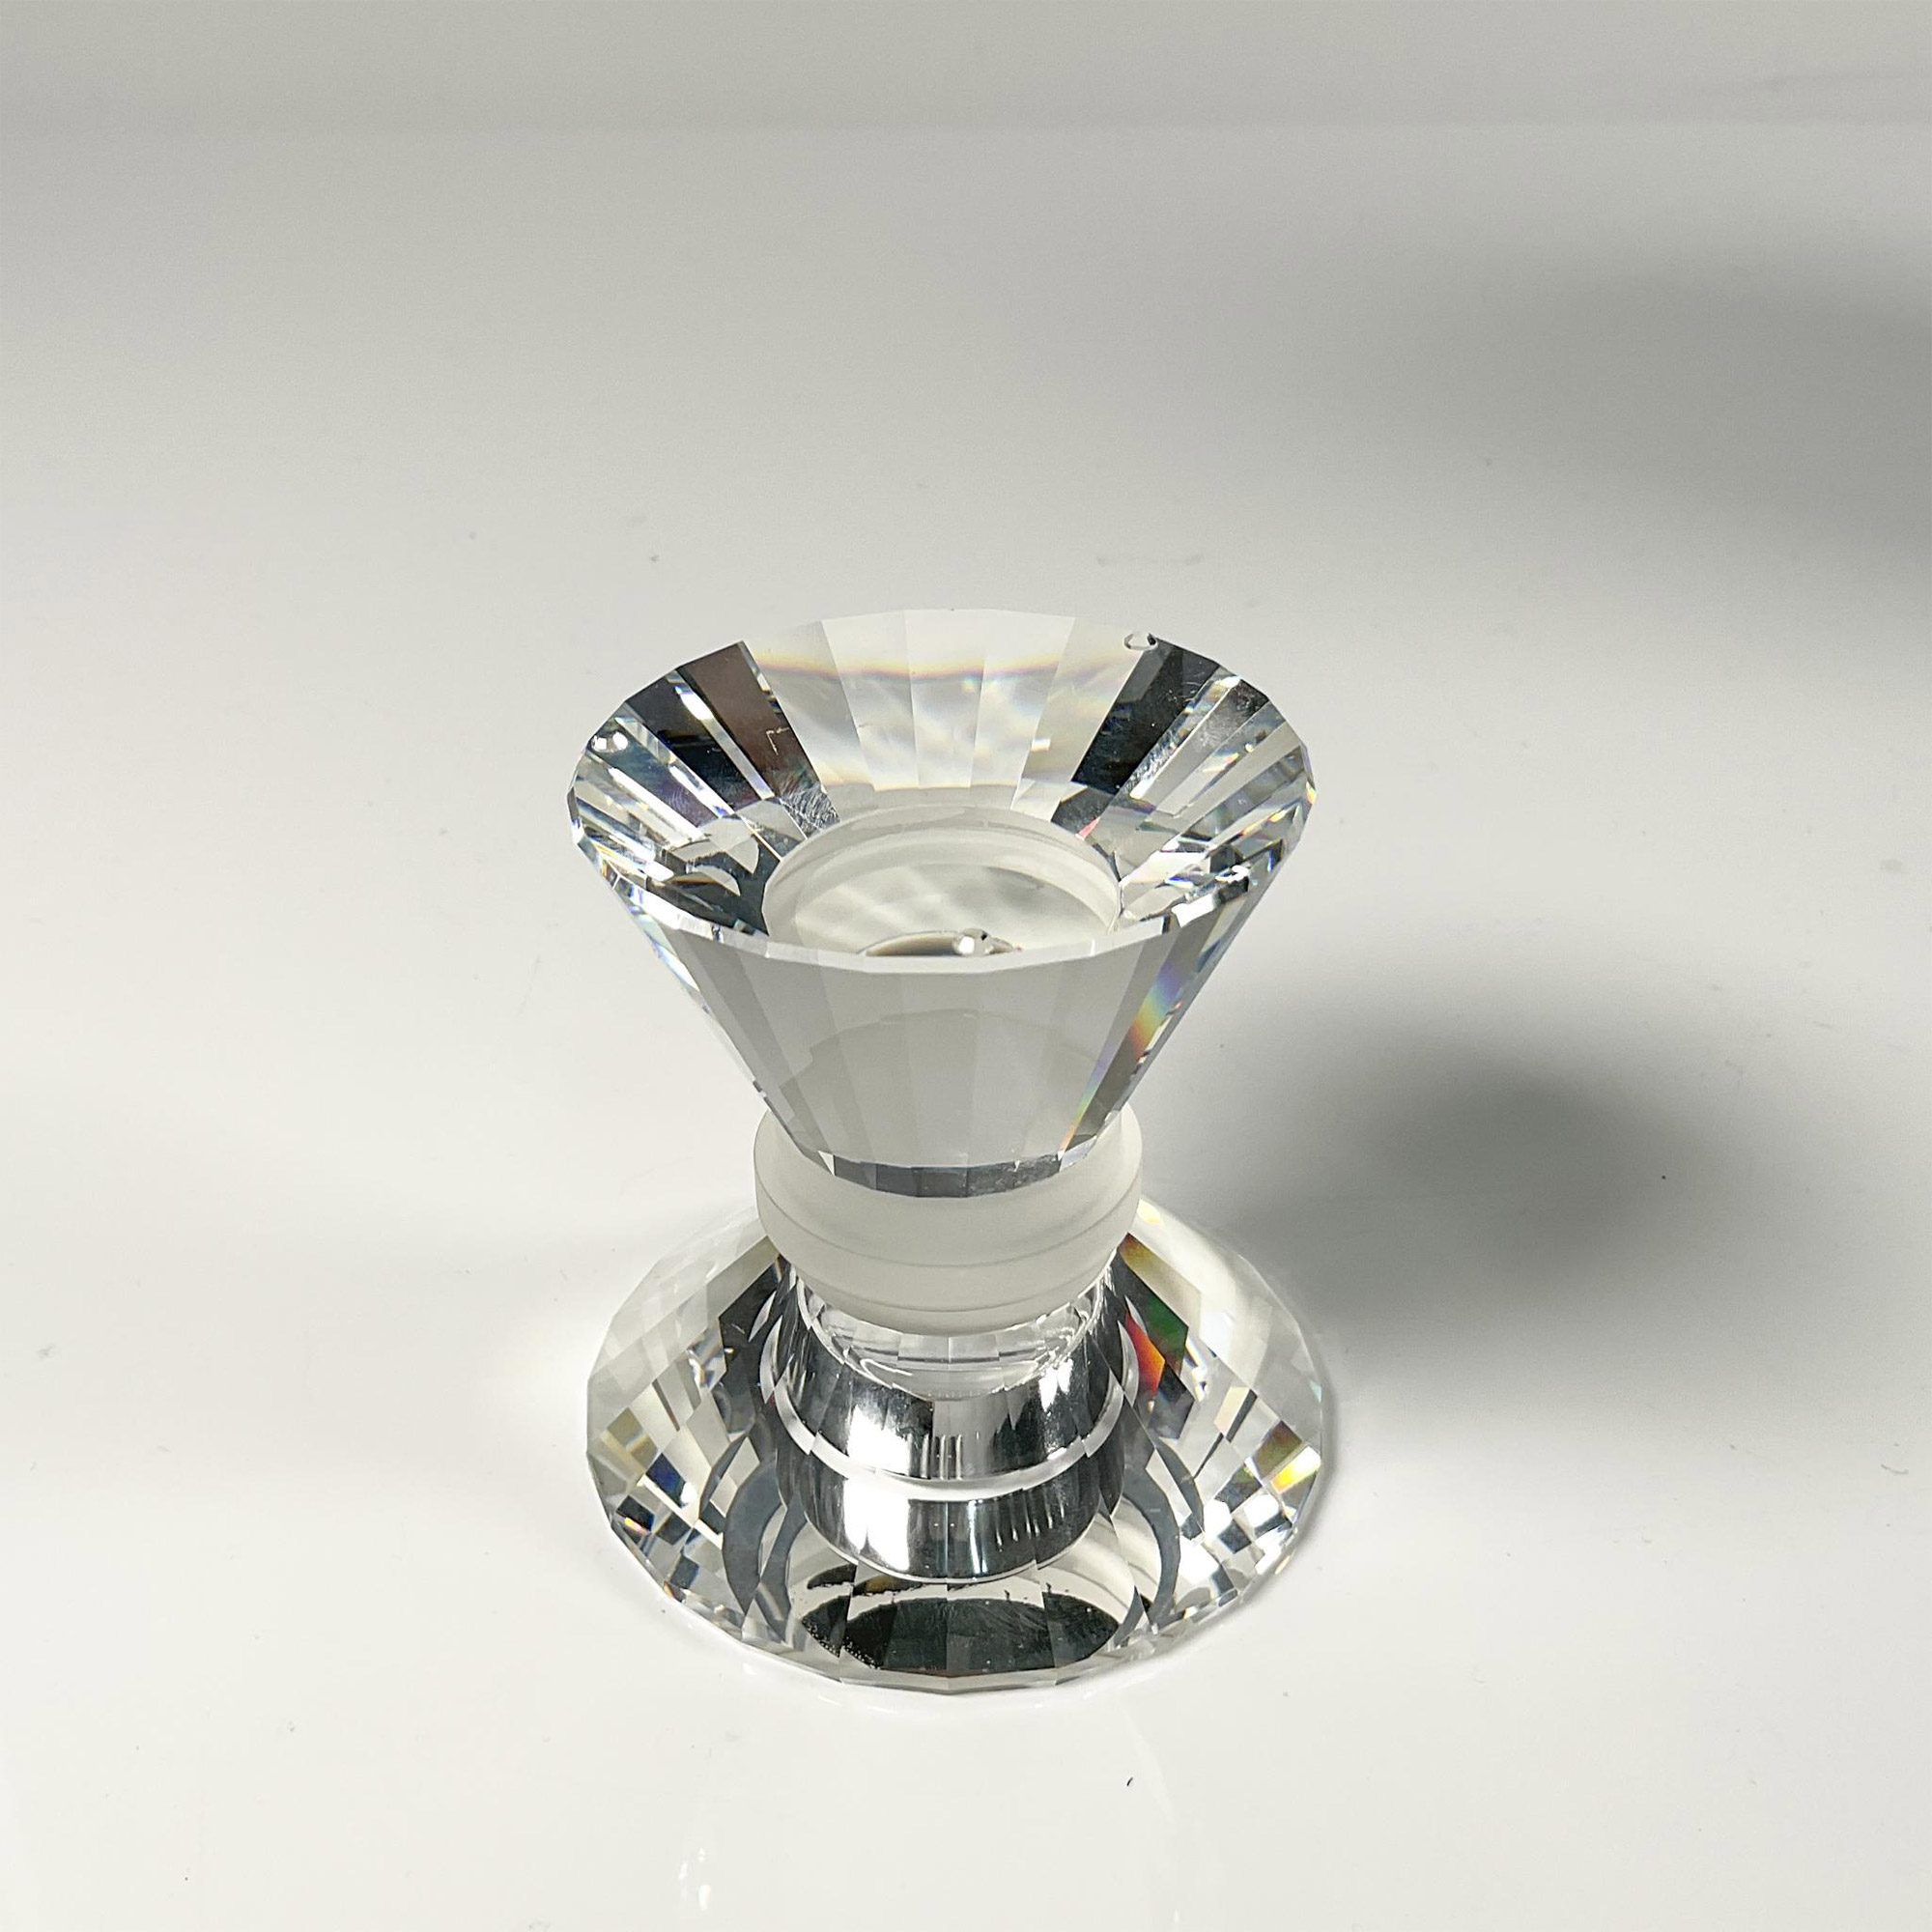 Swarovski Lead Crystal Candleholder - Image 2 of 4